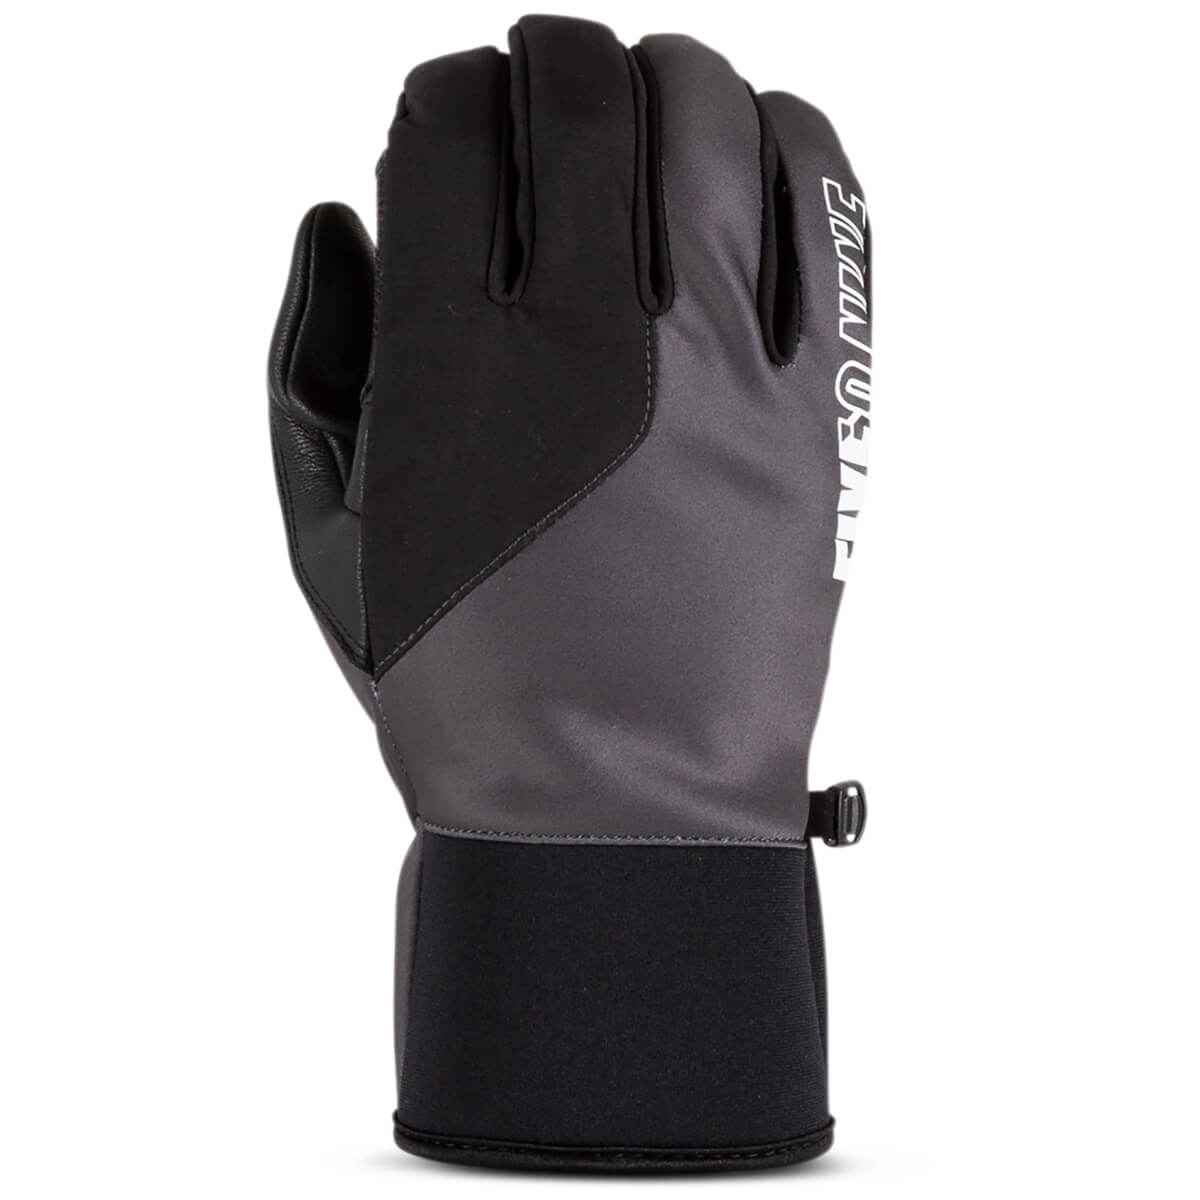 Factor Pro Gloves - Black / 2X